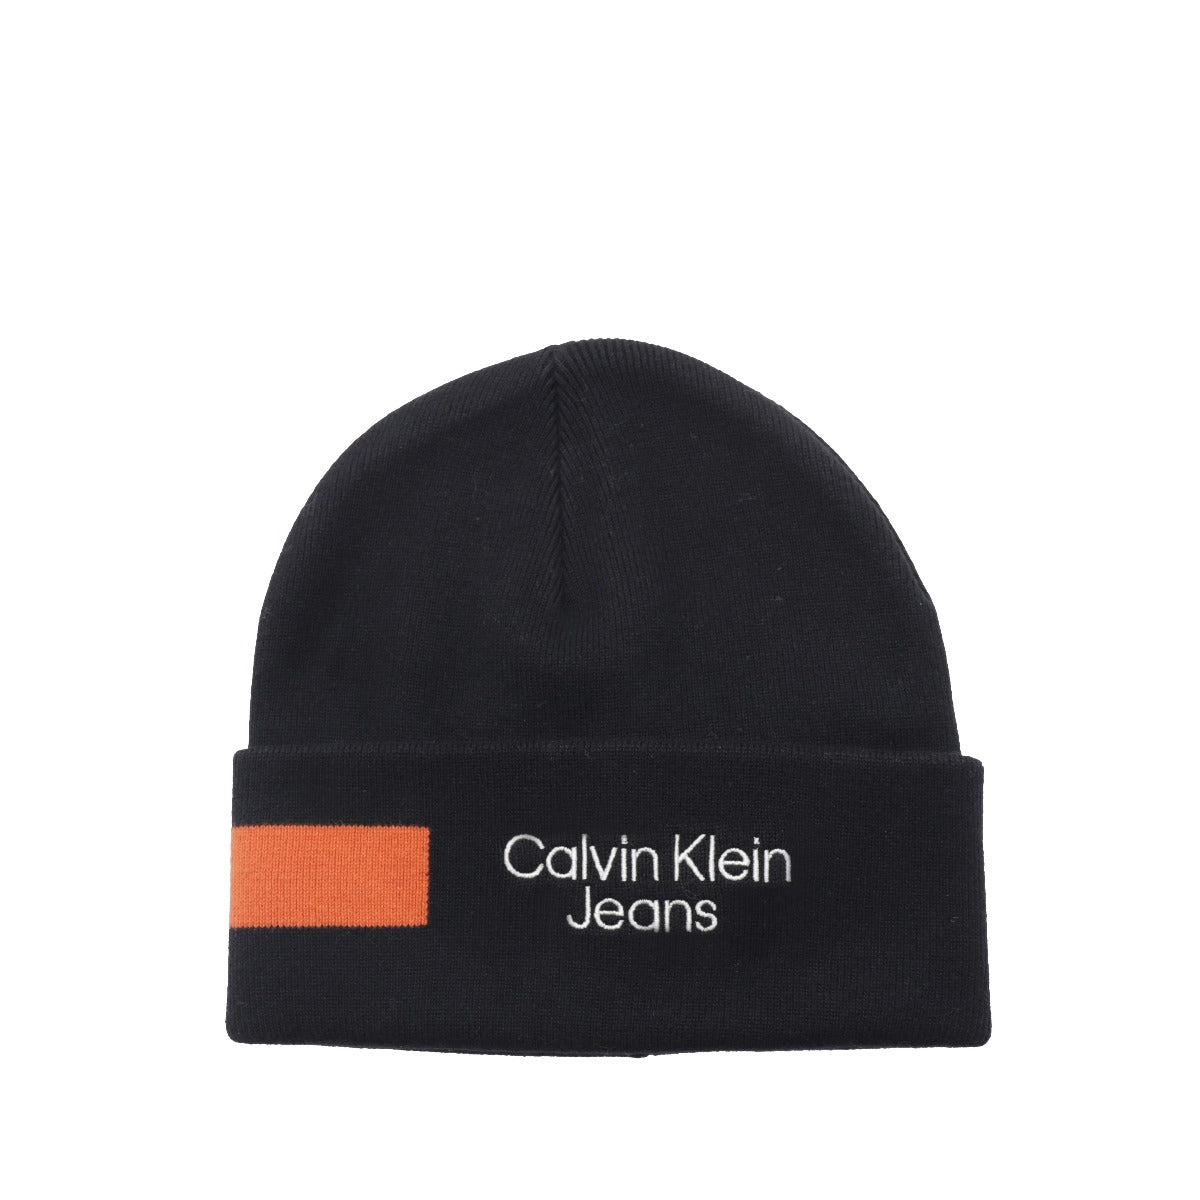 Calvin Klein Black Men's Hat with Taped Logo